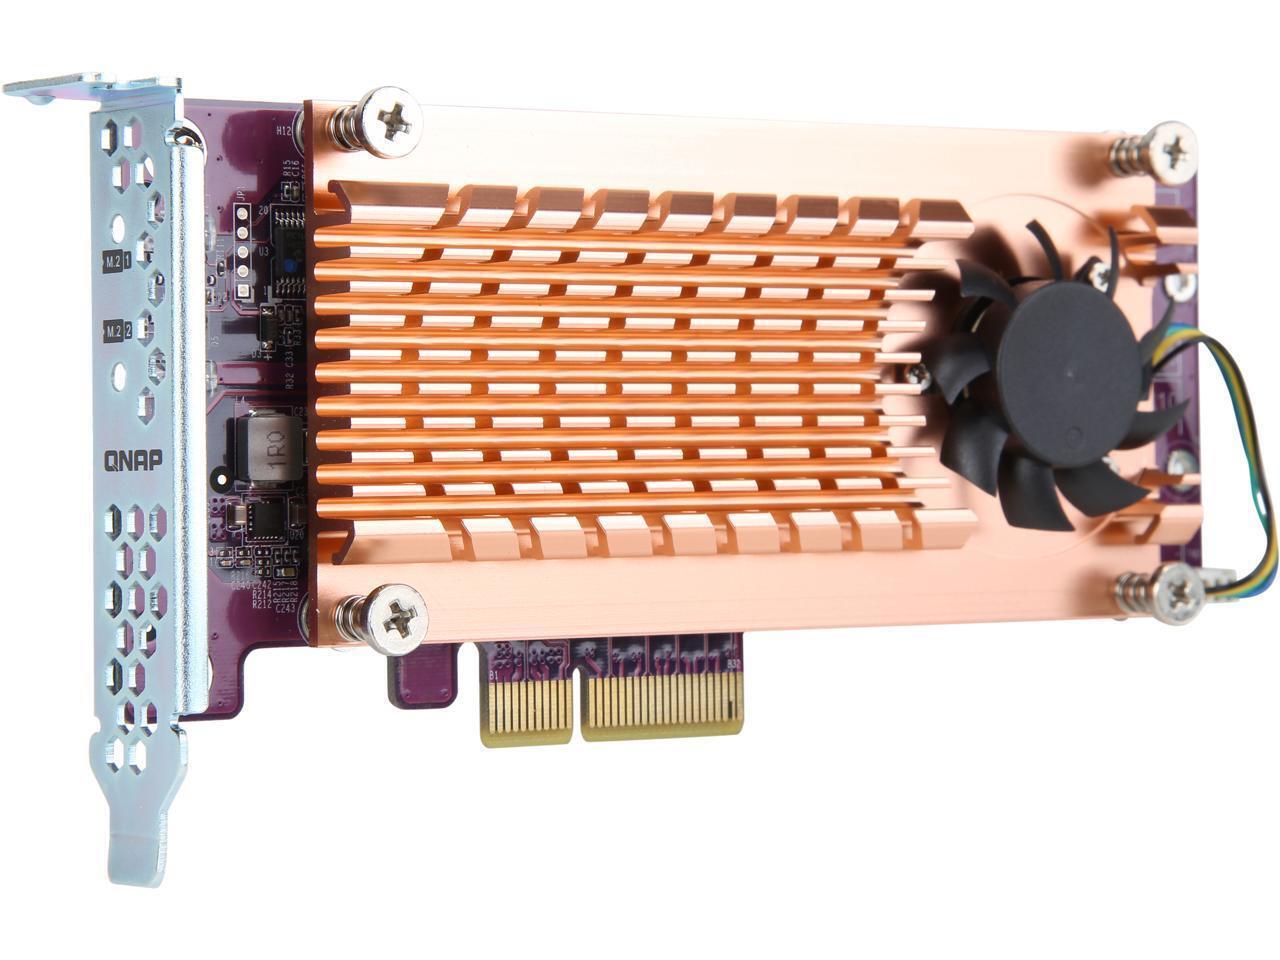 QNAP QM2-2P-244A Dual M.2 22110/2280 PCIe SSD Expansion Card